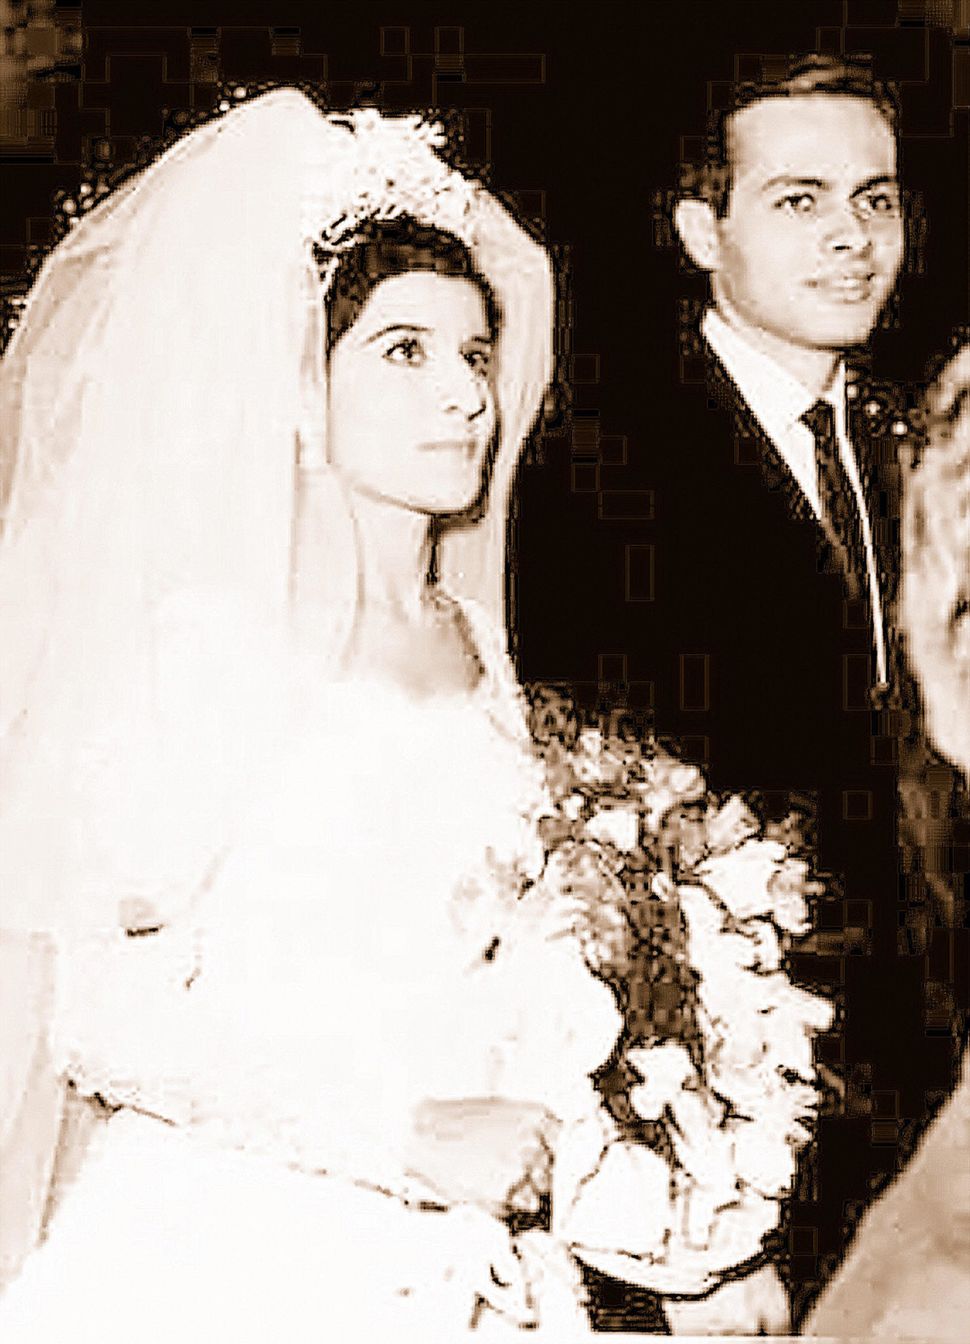 Egyptian billionaire Ashraf Marwan on his wedding day with his bride Mona Abdel Nasser, daughter of late Egyptian president G